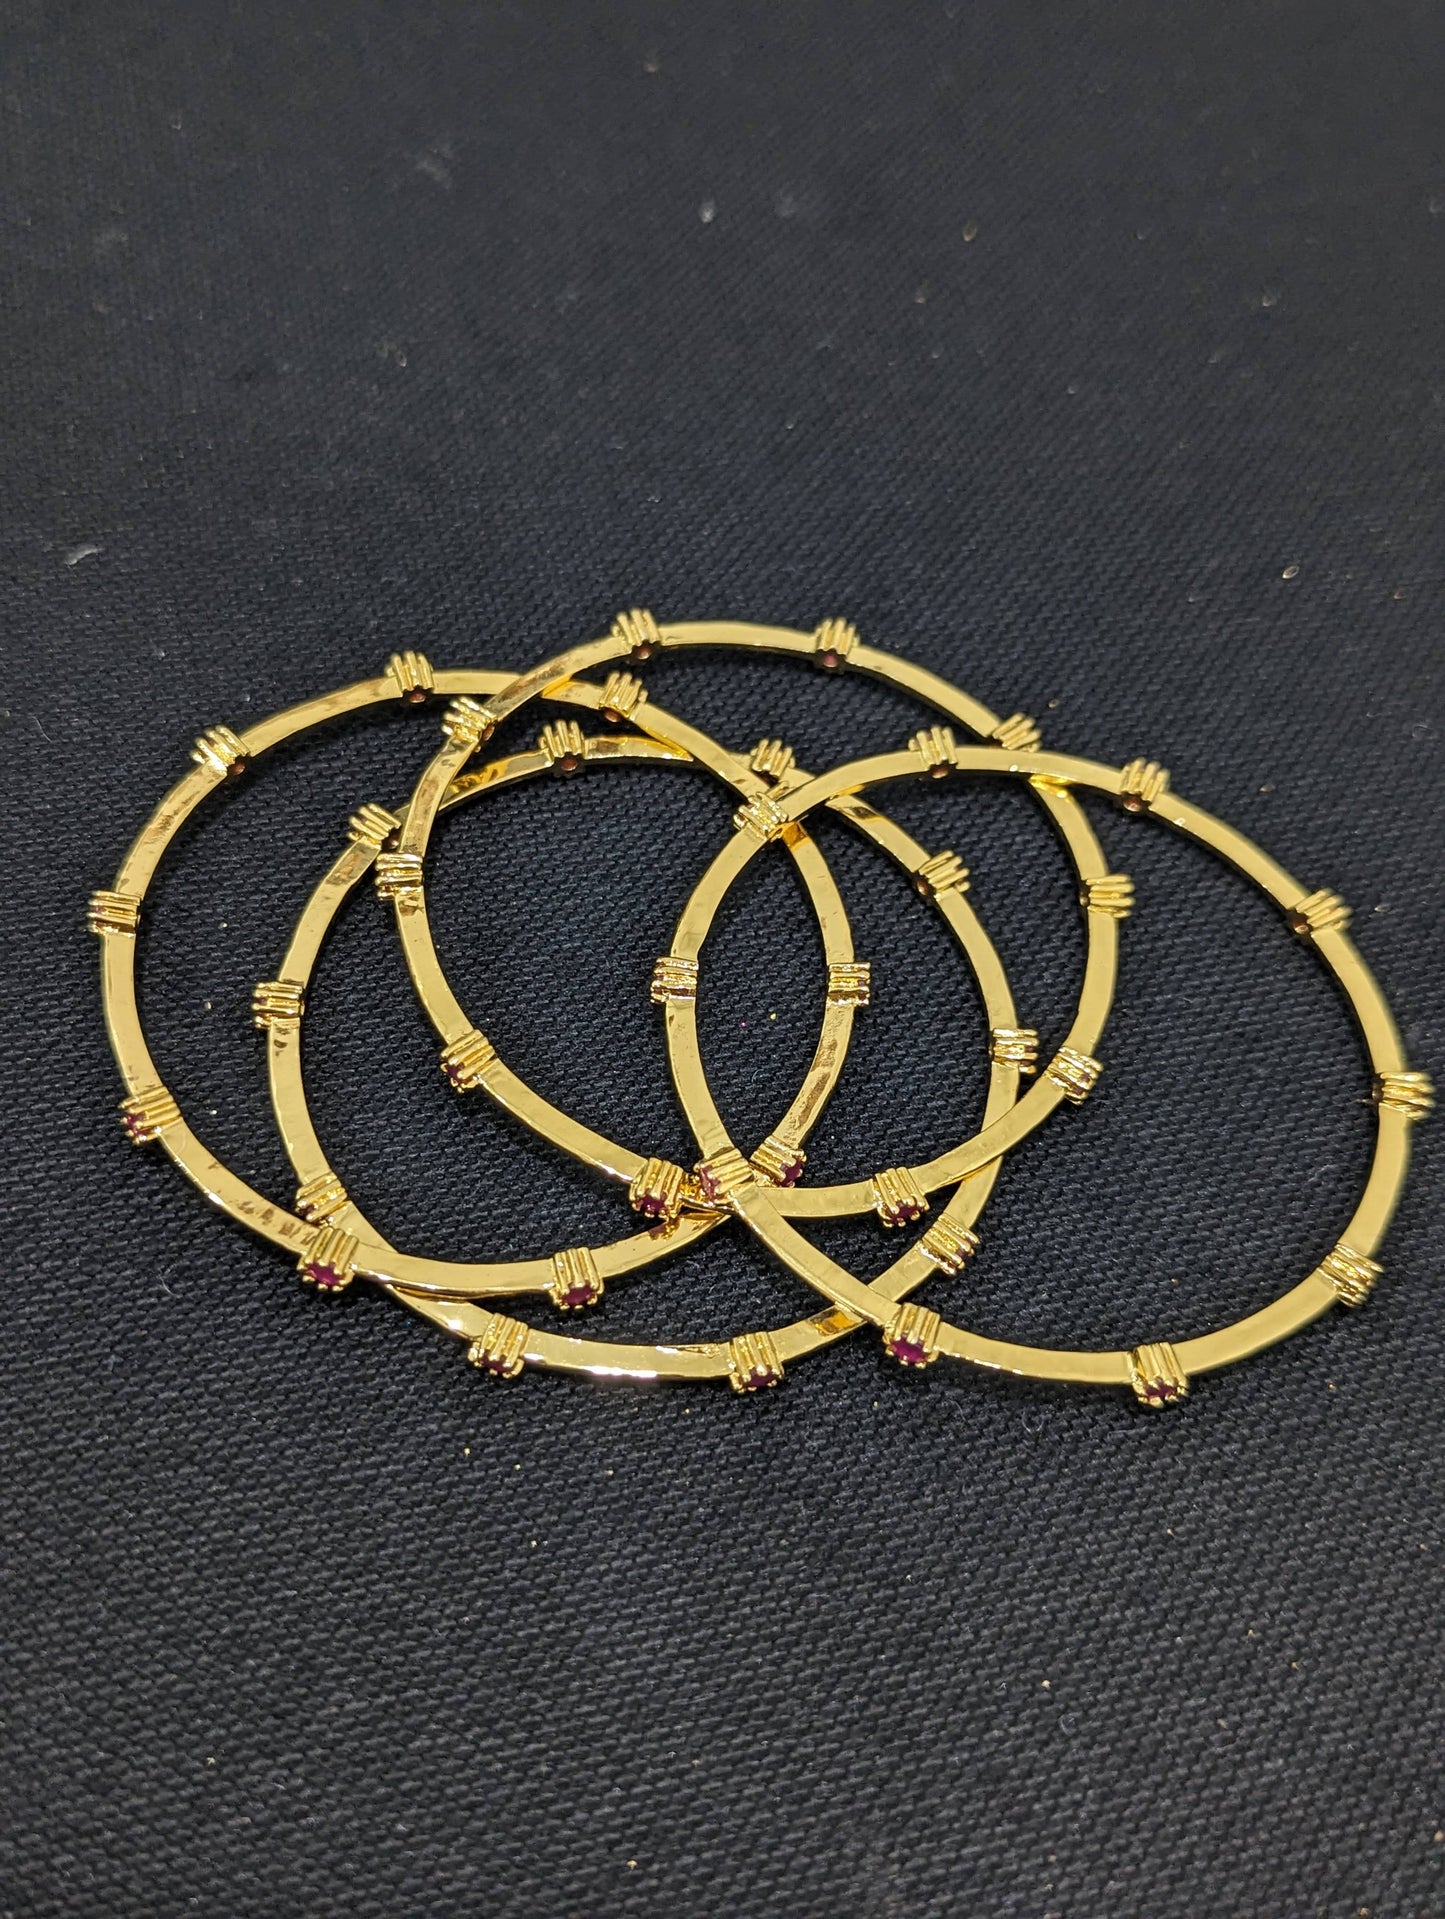 Ruby CZ stone One gram gold bangles - Set of 4